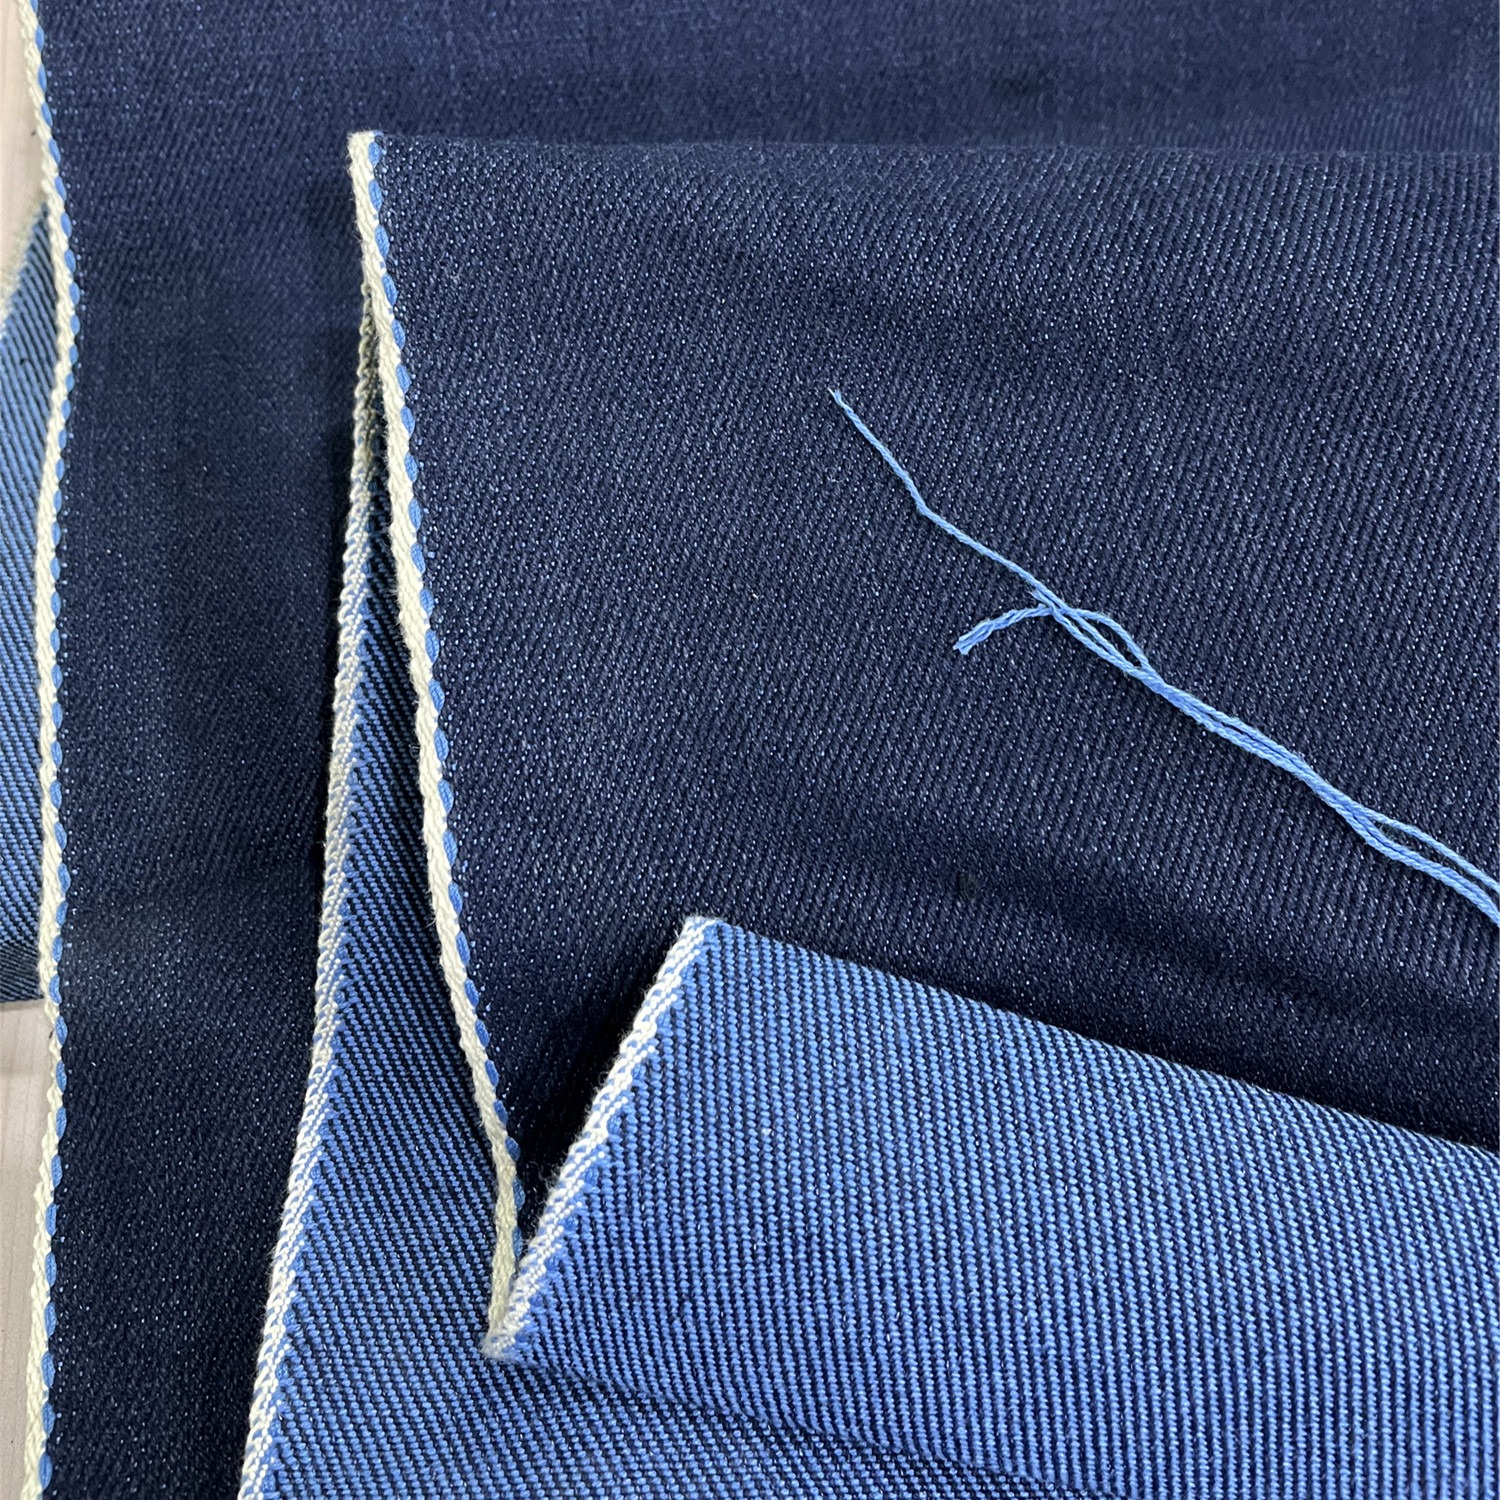 32 oz Selvedge Denim Jeans Cloth Manufacturers Blue Weft Yarns Custom Selvedge Denim W3232